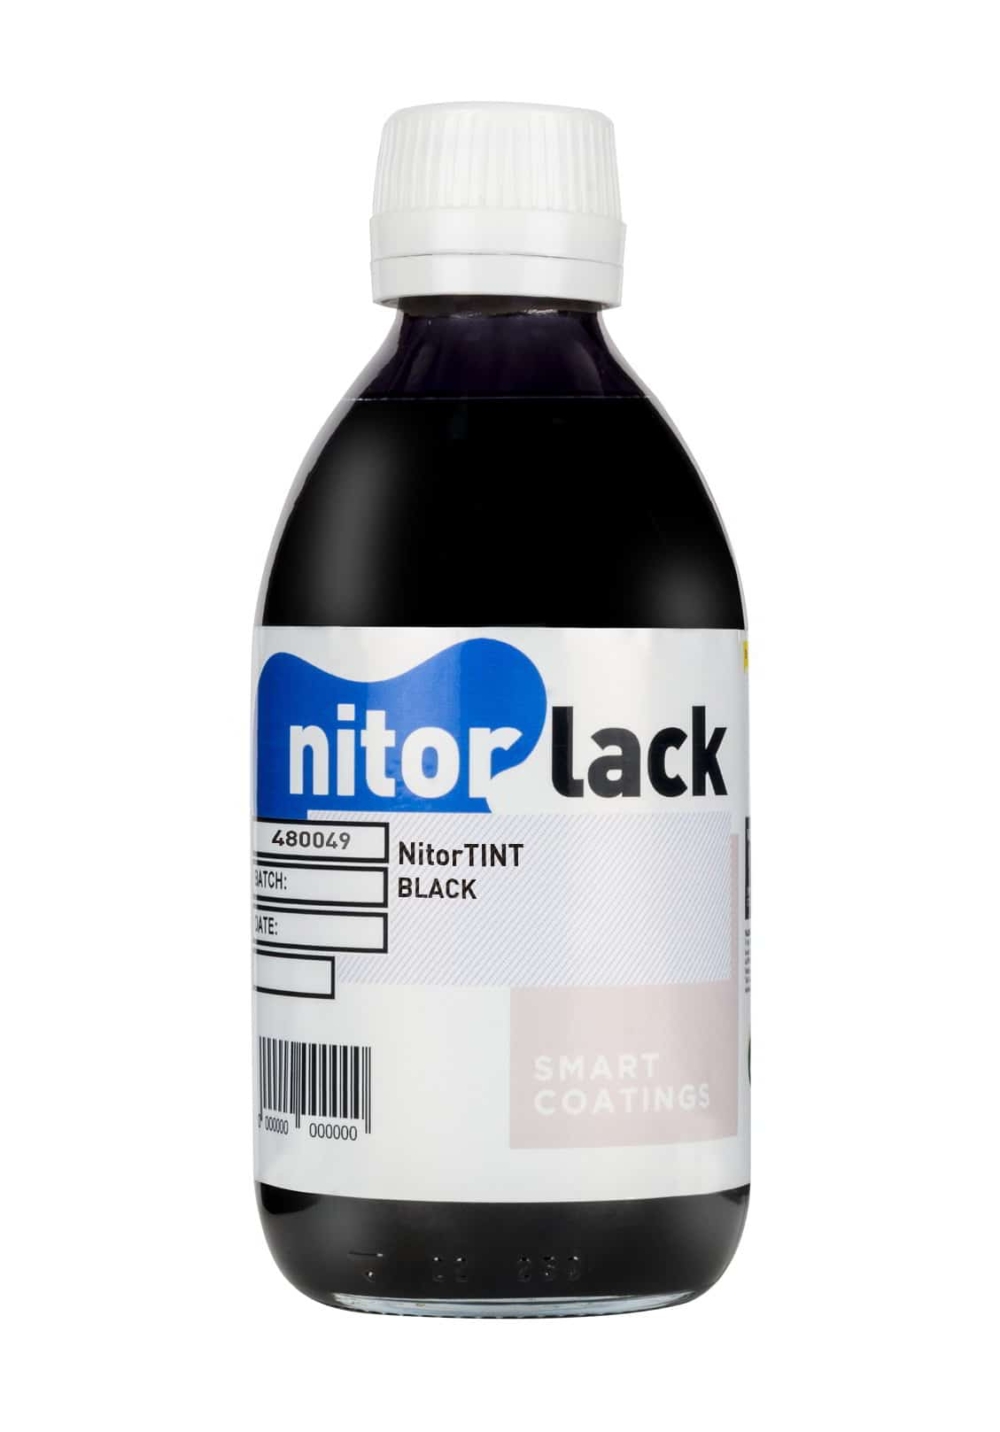 NitorTINT BLACK